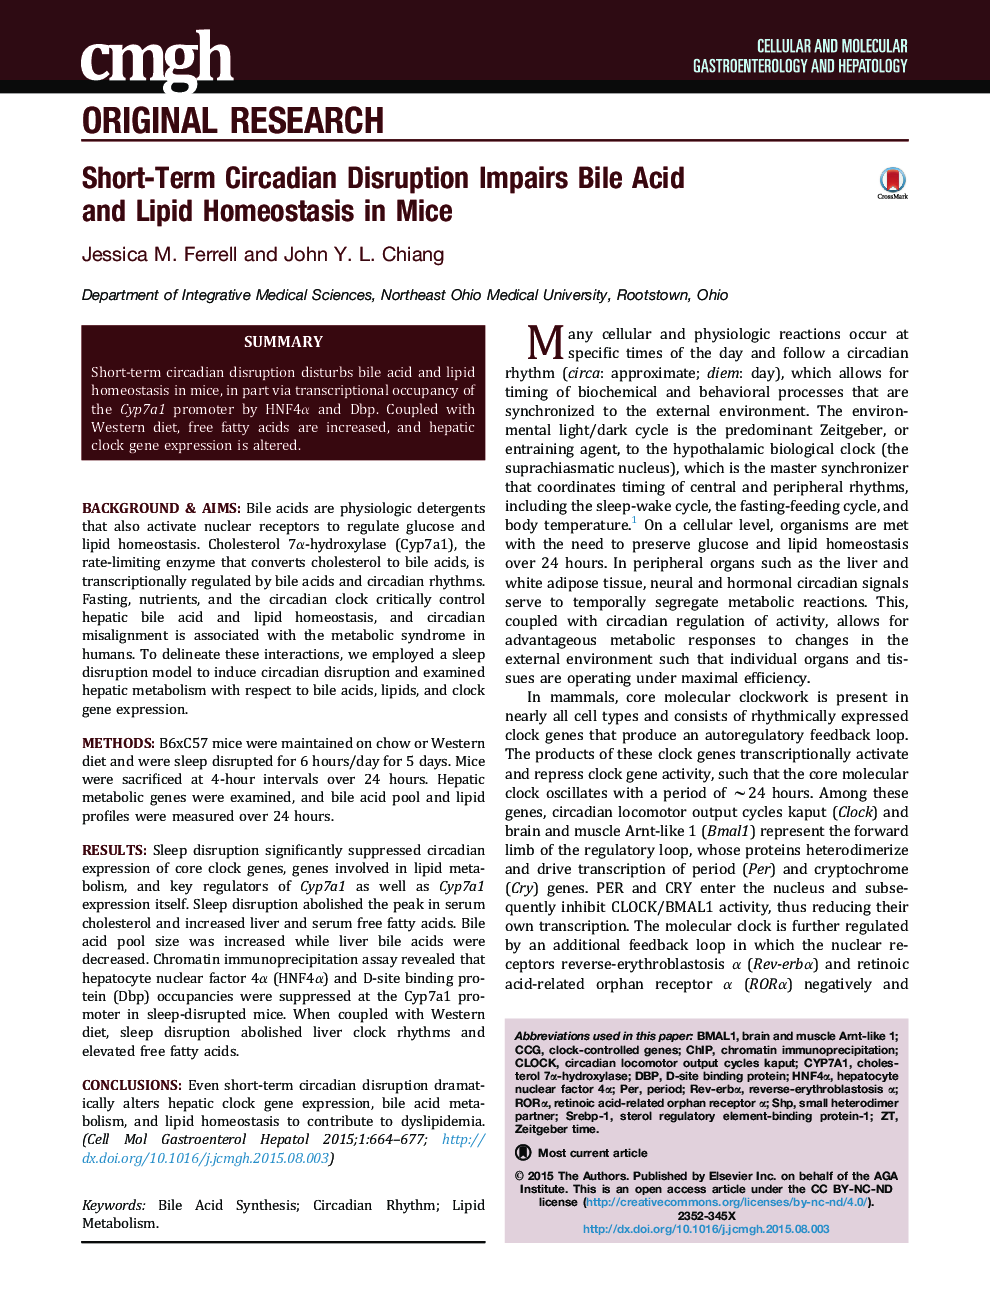 Short-Term Circadian Disruption Impairs Bile Acid and Lipid Homeostasis in Mice 